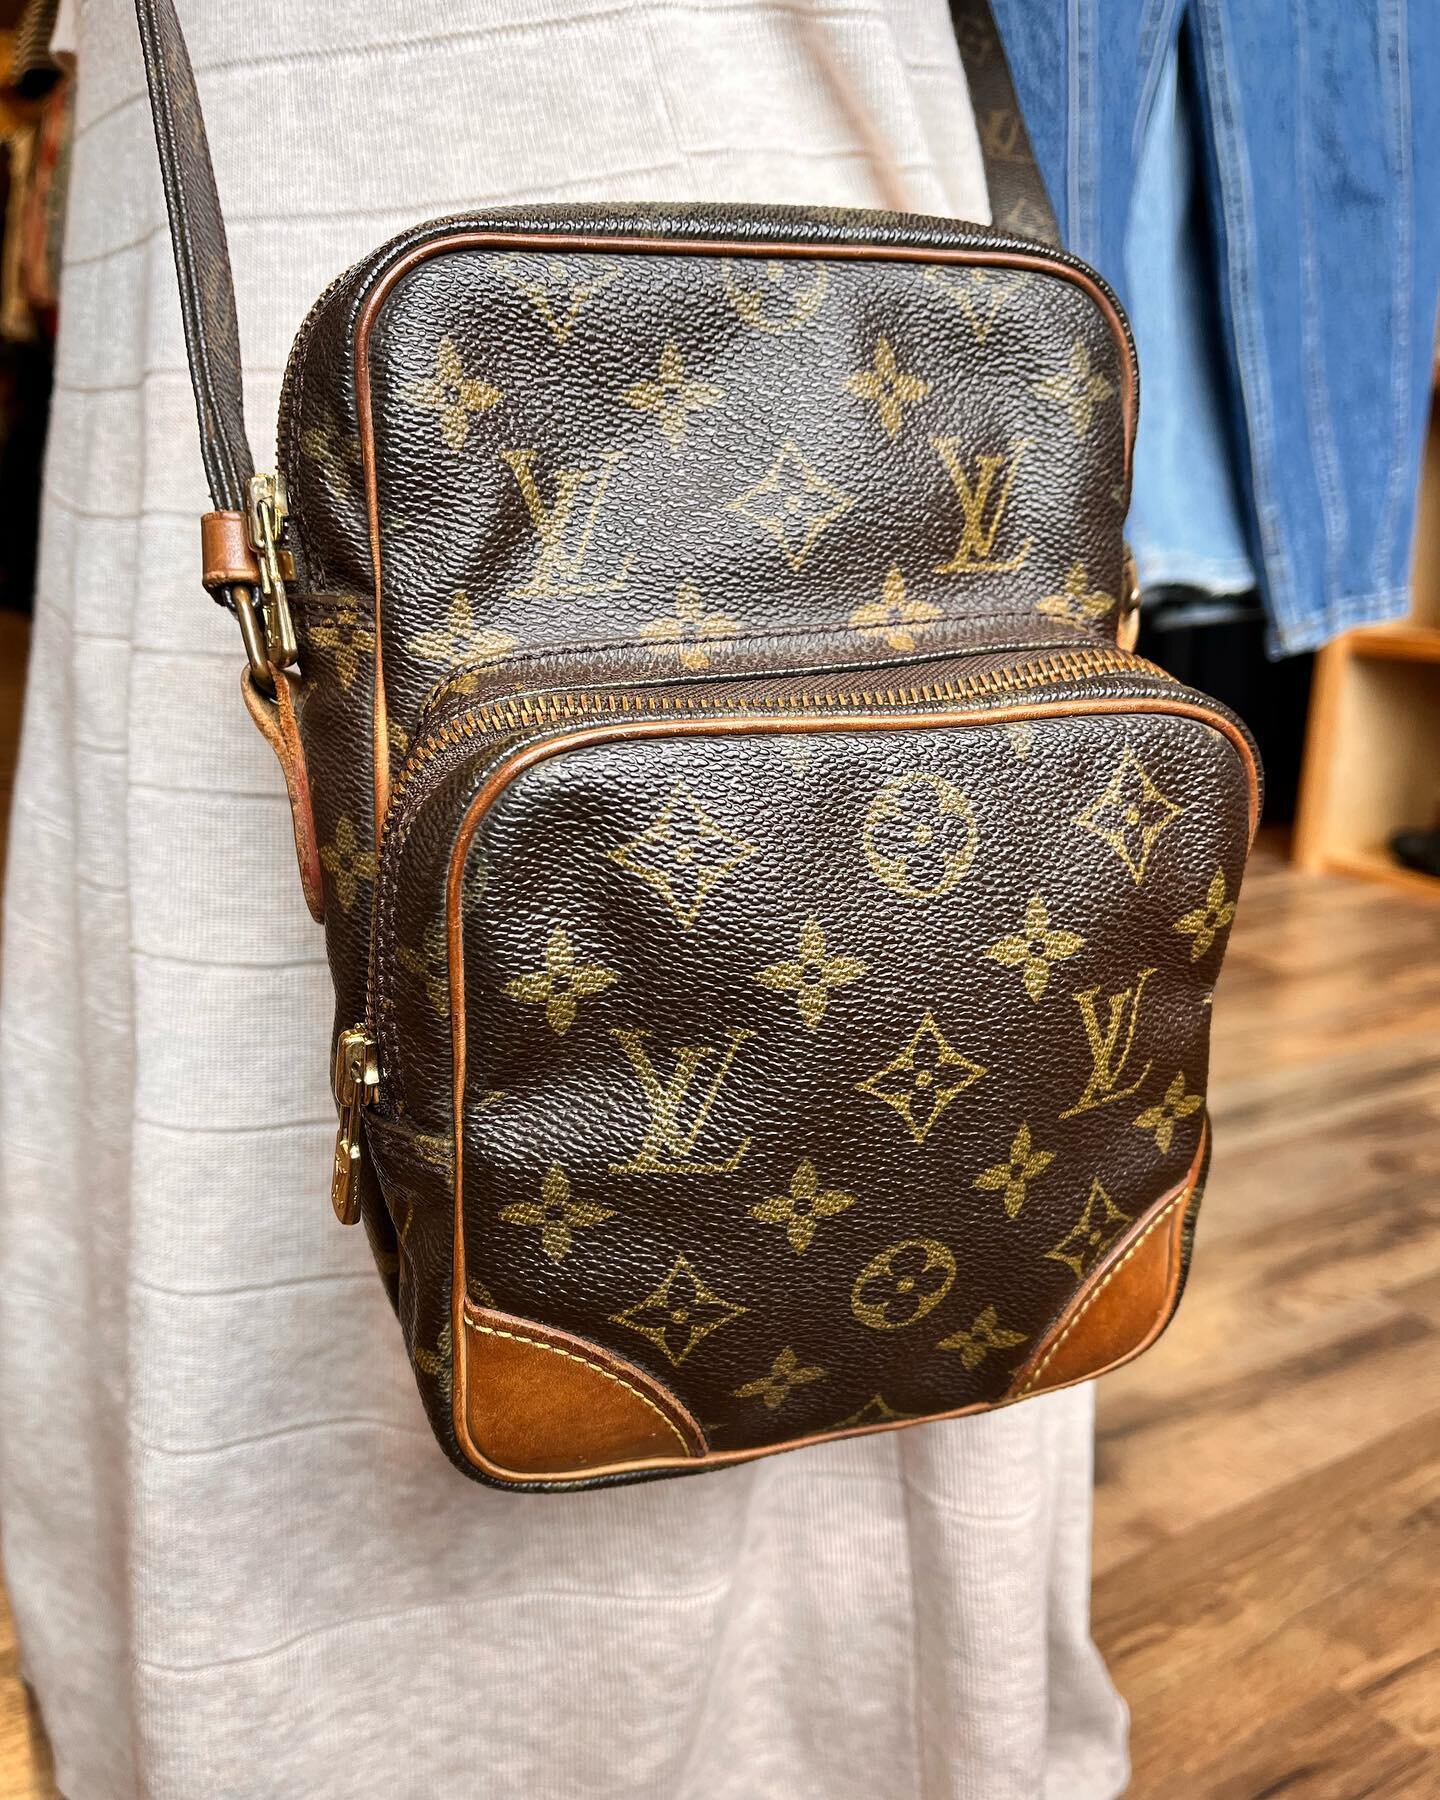 Louis Vuitton Amazone crossbody bag in beautiful condition 🥰🥰🥰 $399 
.
.
#uptownattic #designerconsignment #consignment #consignmentboutique #louisvuitton #amazone #crossbodybag #hudsonvalley #gardinerny #newpaltzny #beacon #vintageclothing #thrif